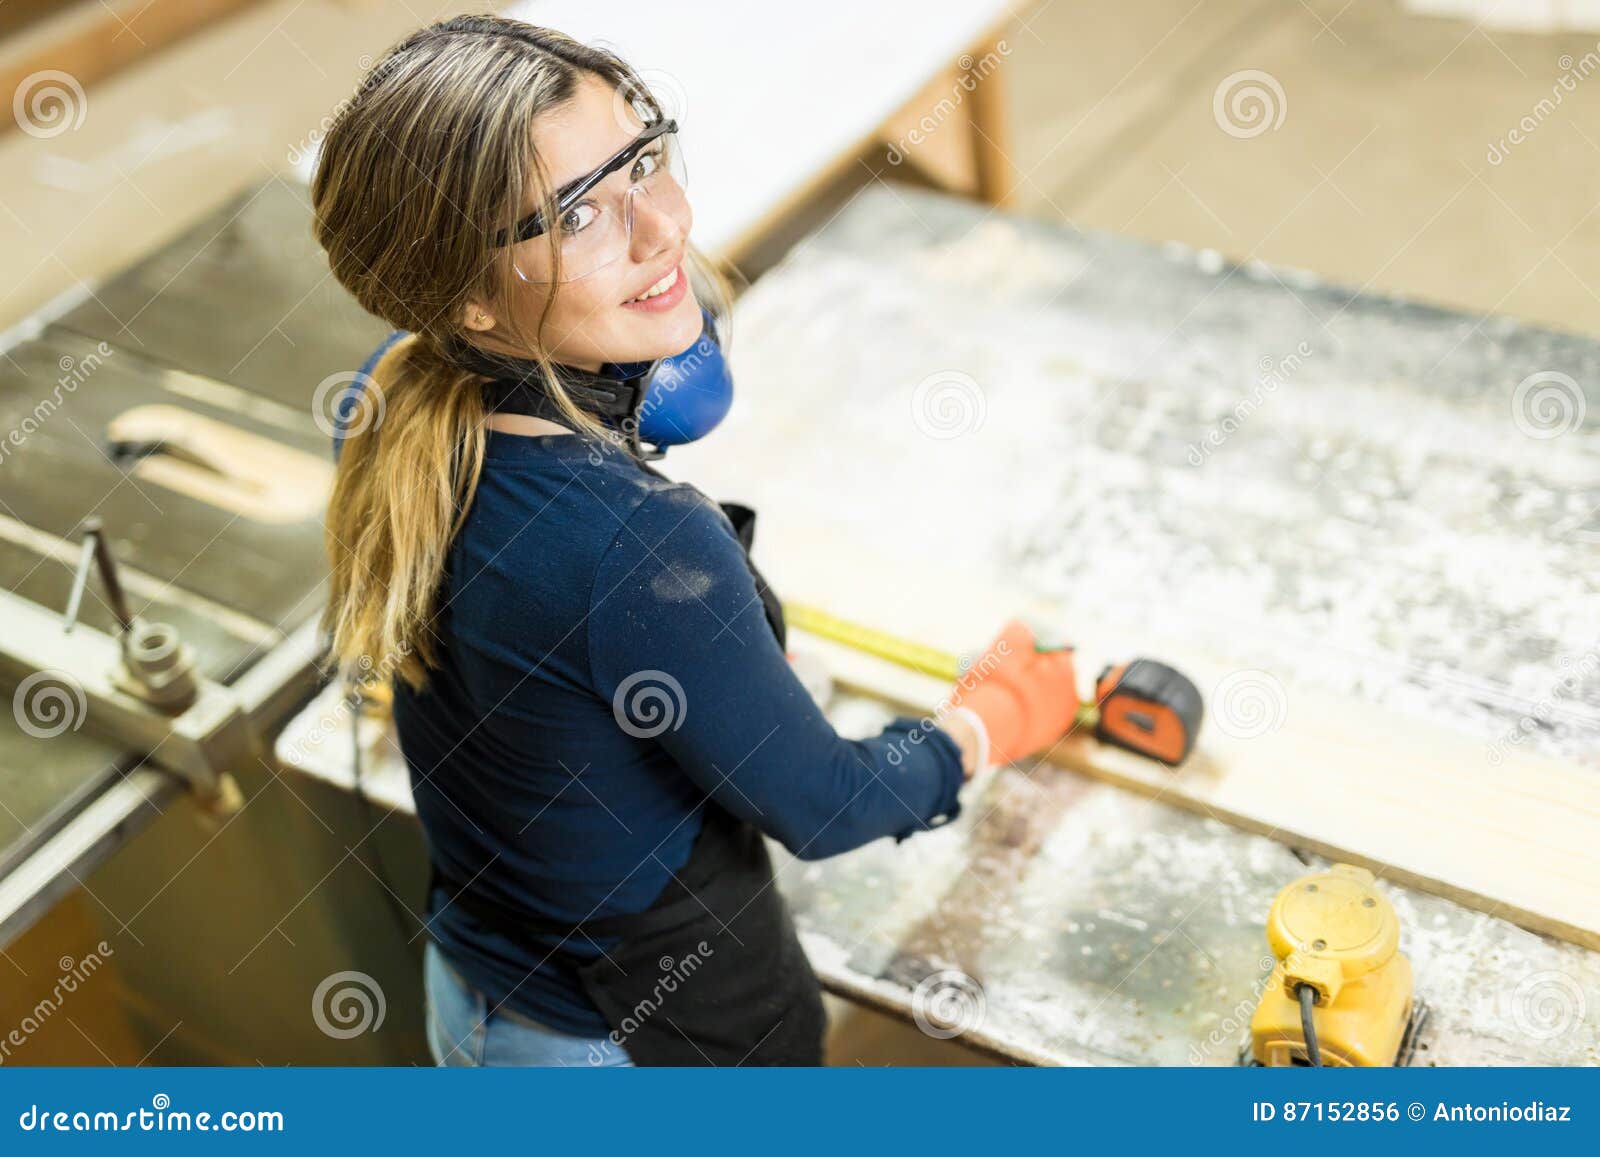 Cute Hispanic Woman Doing Some Woodwork Stock Photo Image Of Machine Glasses 87152856